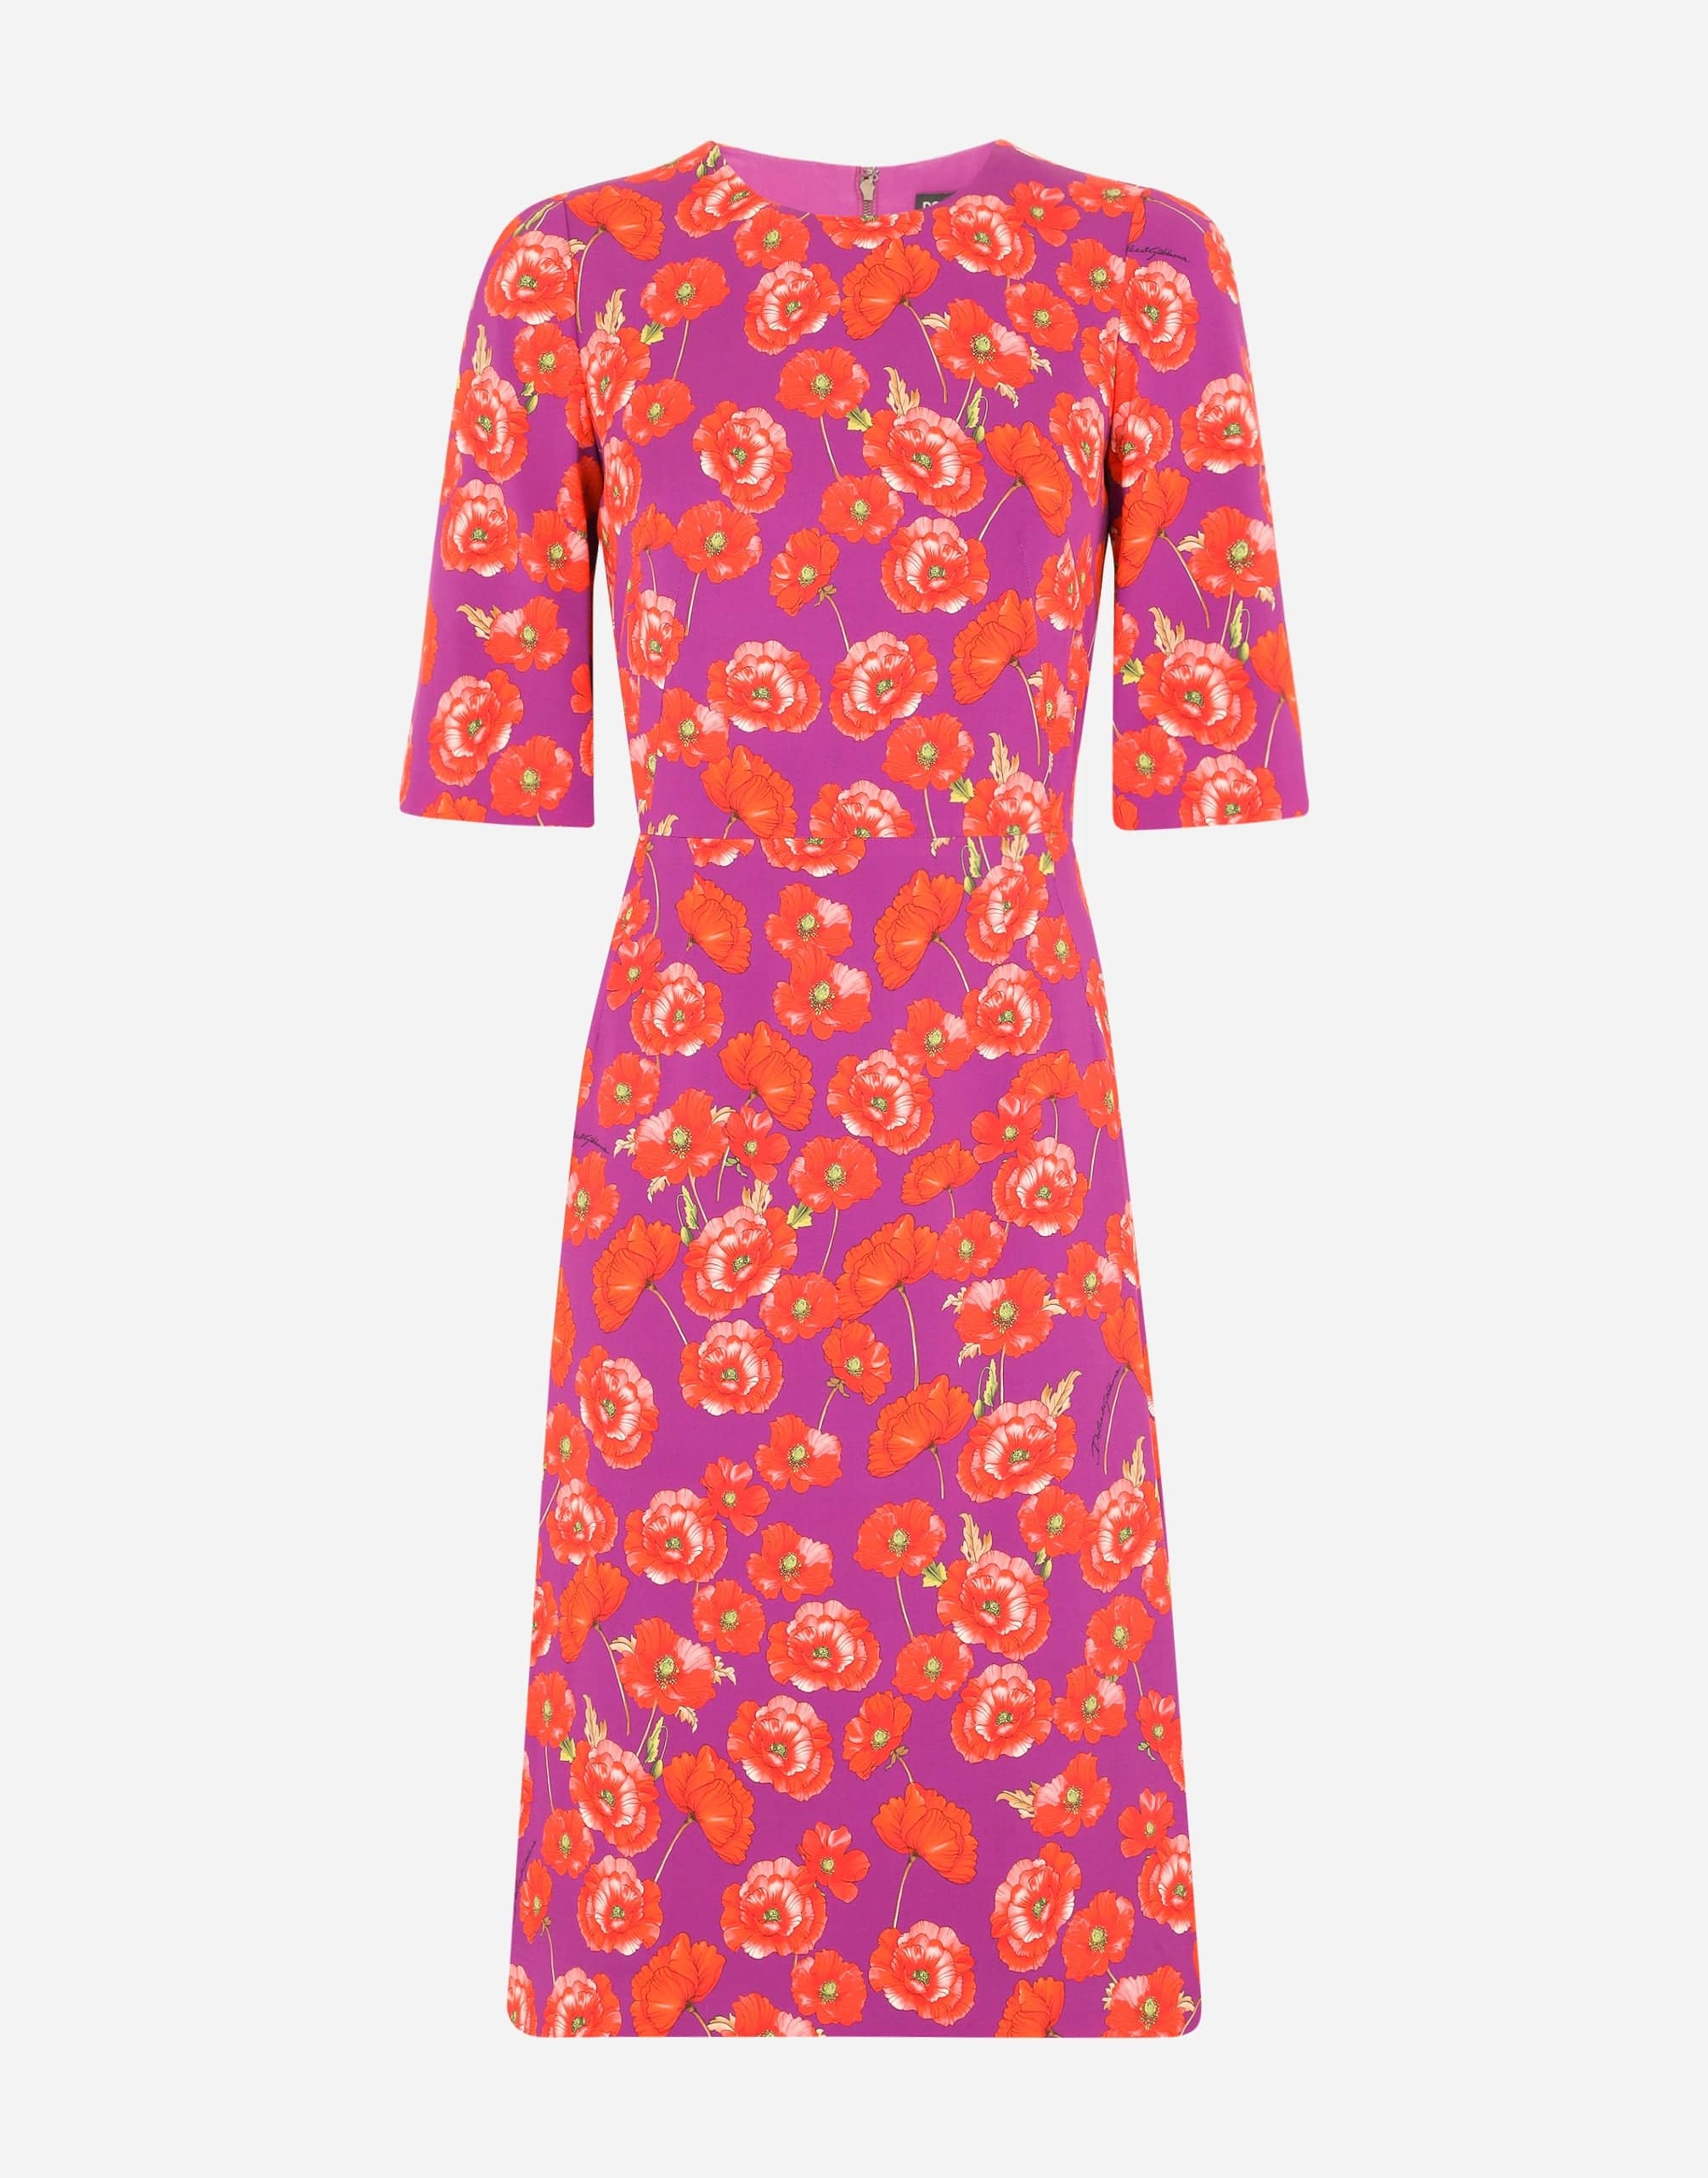 Poppy-Print Three-Quarter Sleeve Dress